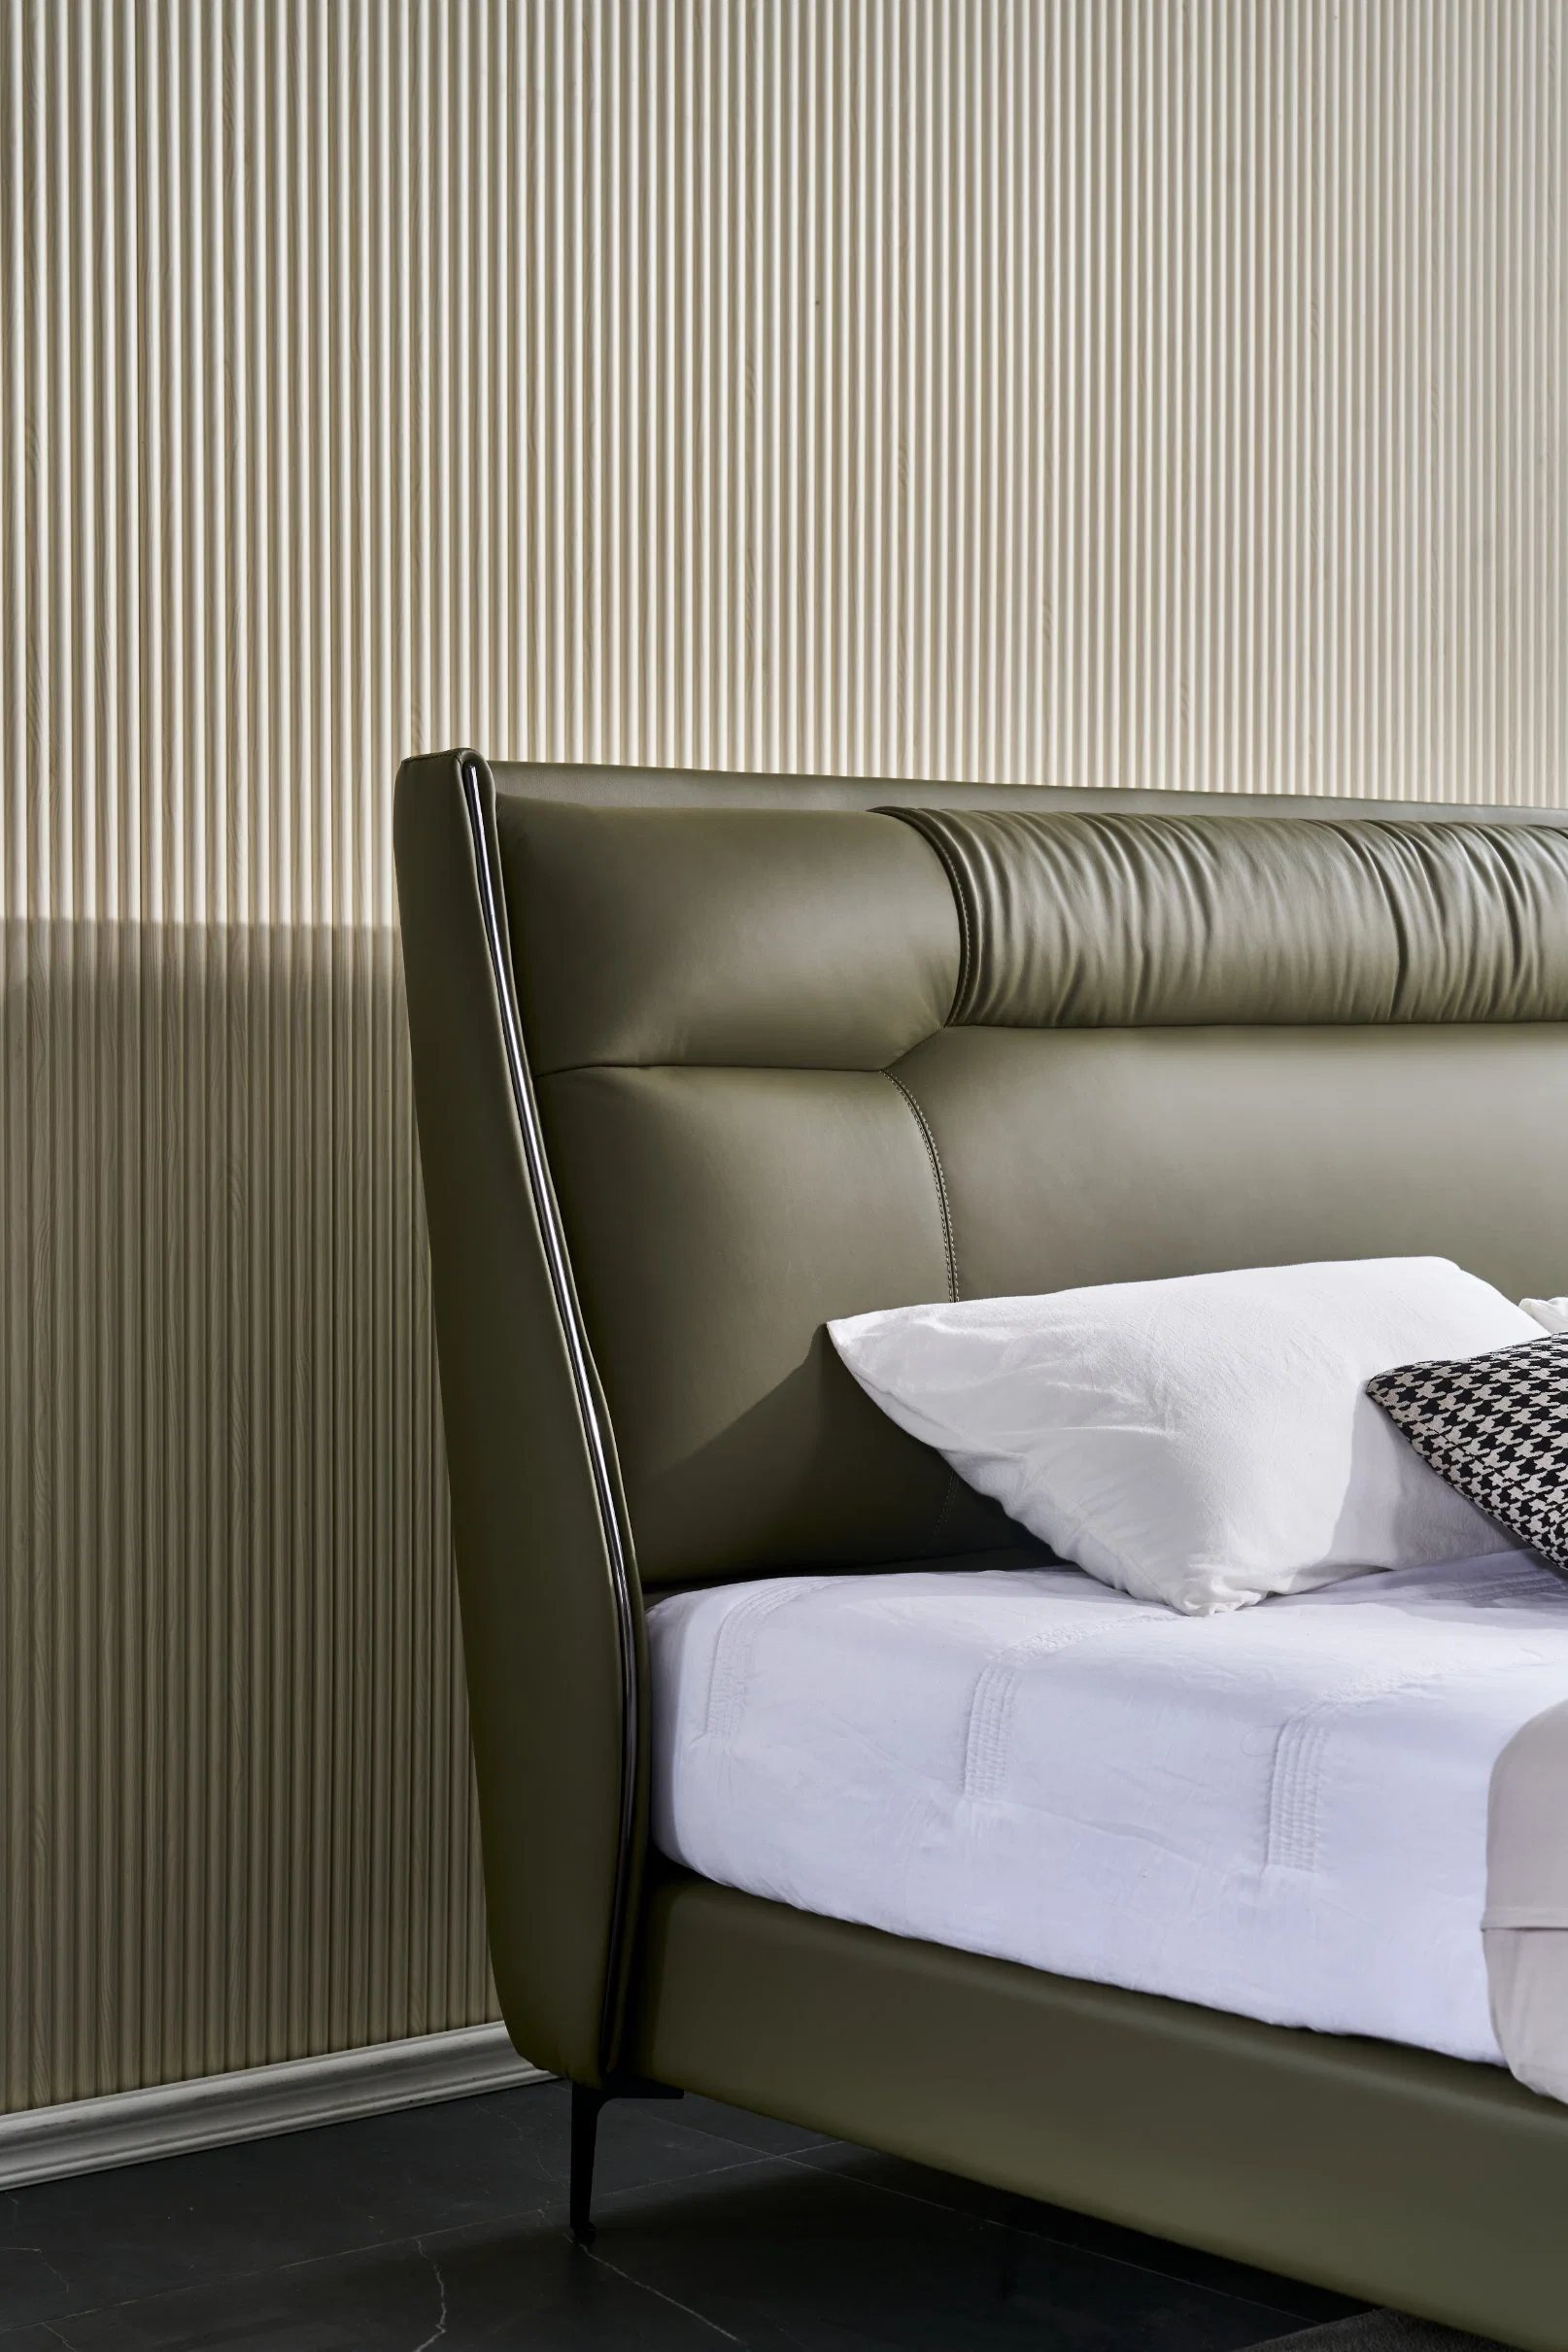 Luxury Bedroom Set Genuine Italian Leather Headboard King Size Hotel Bed Frame